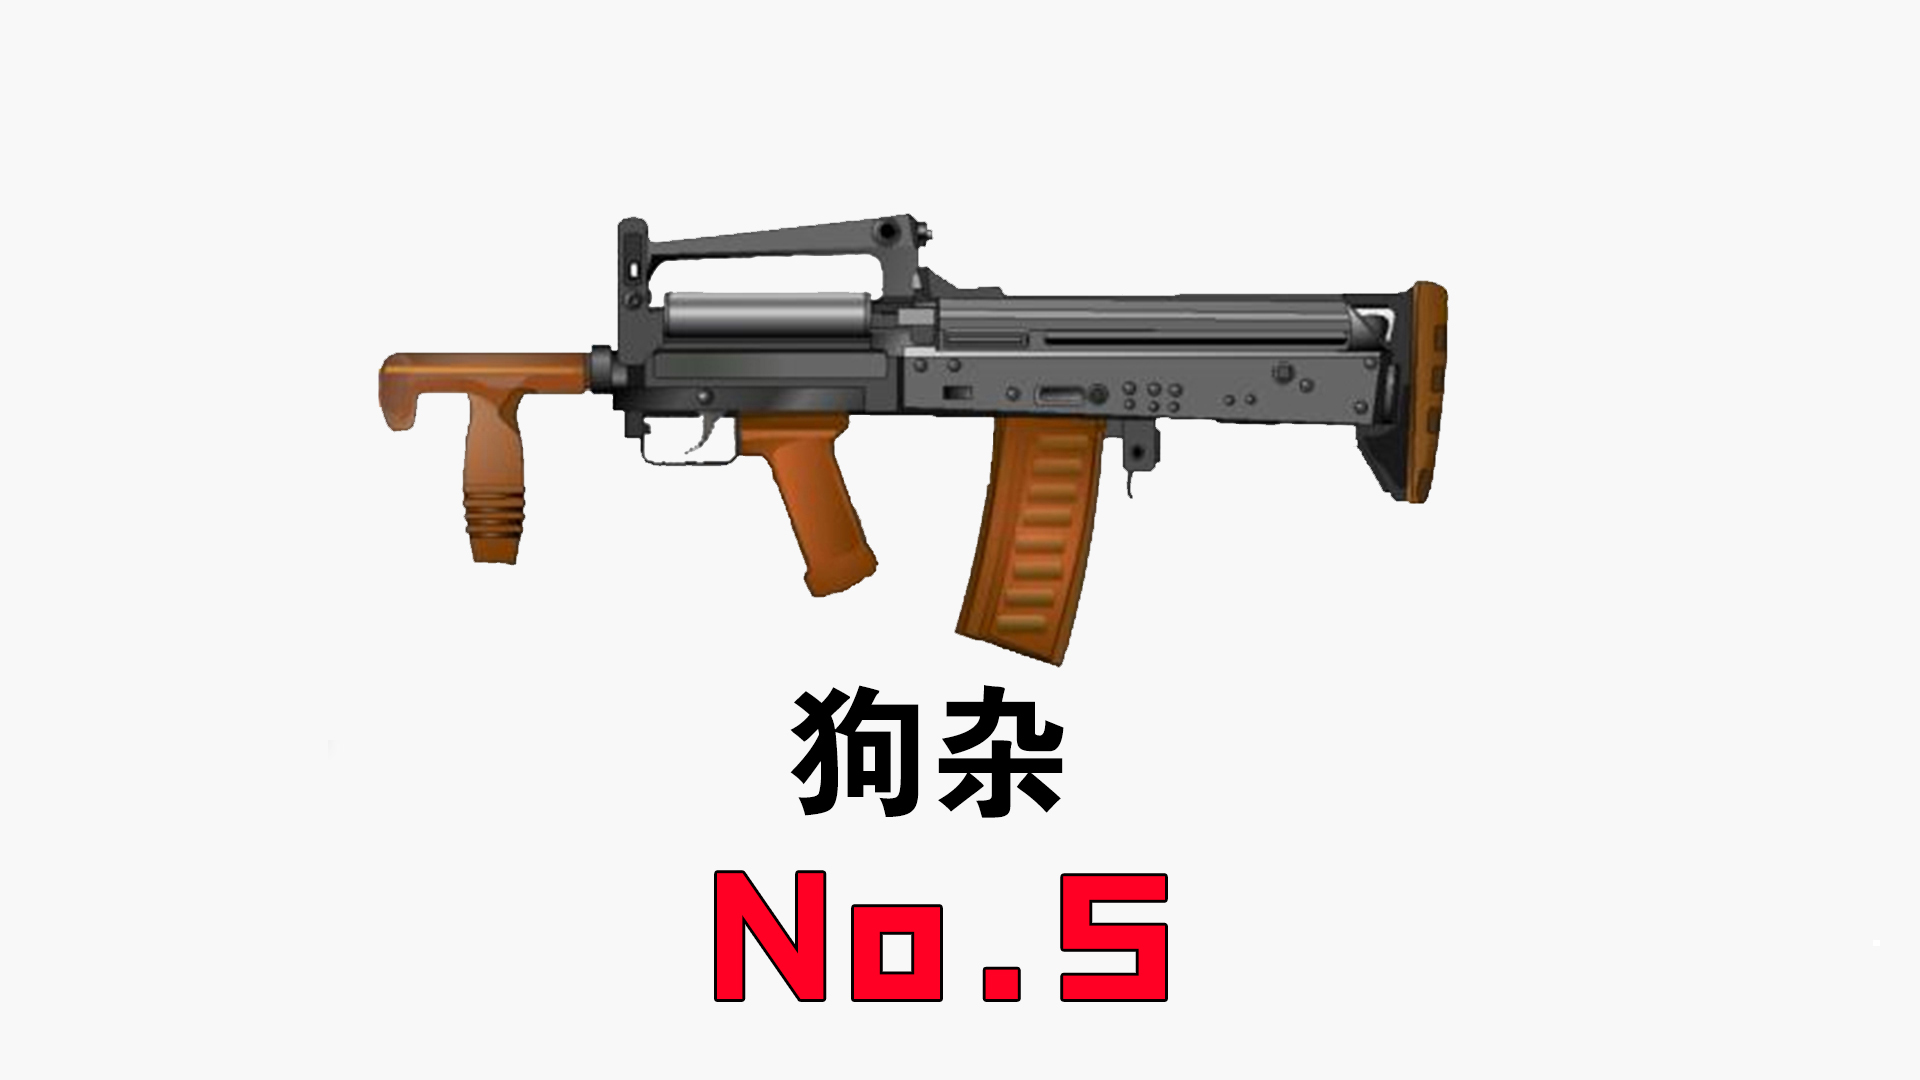 no.5,狗杂突击步枪